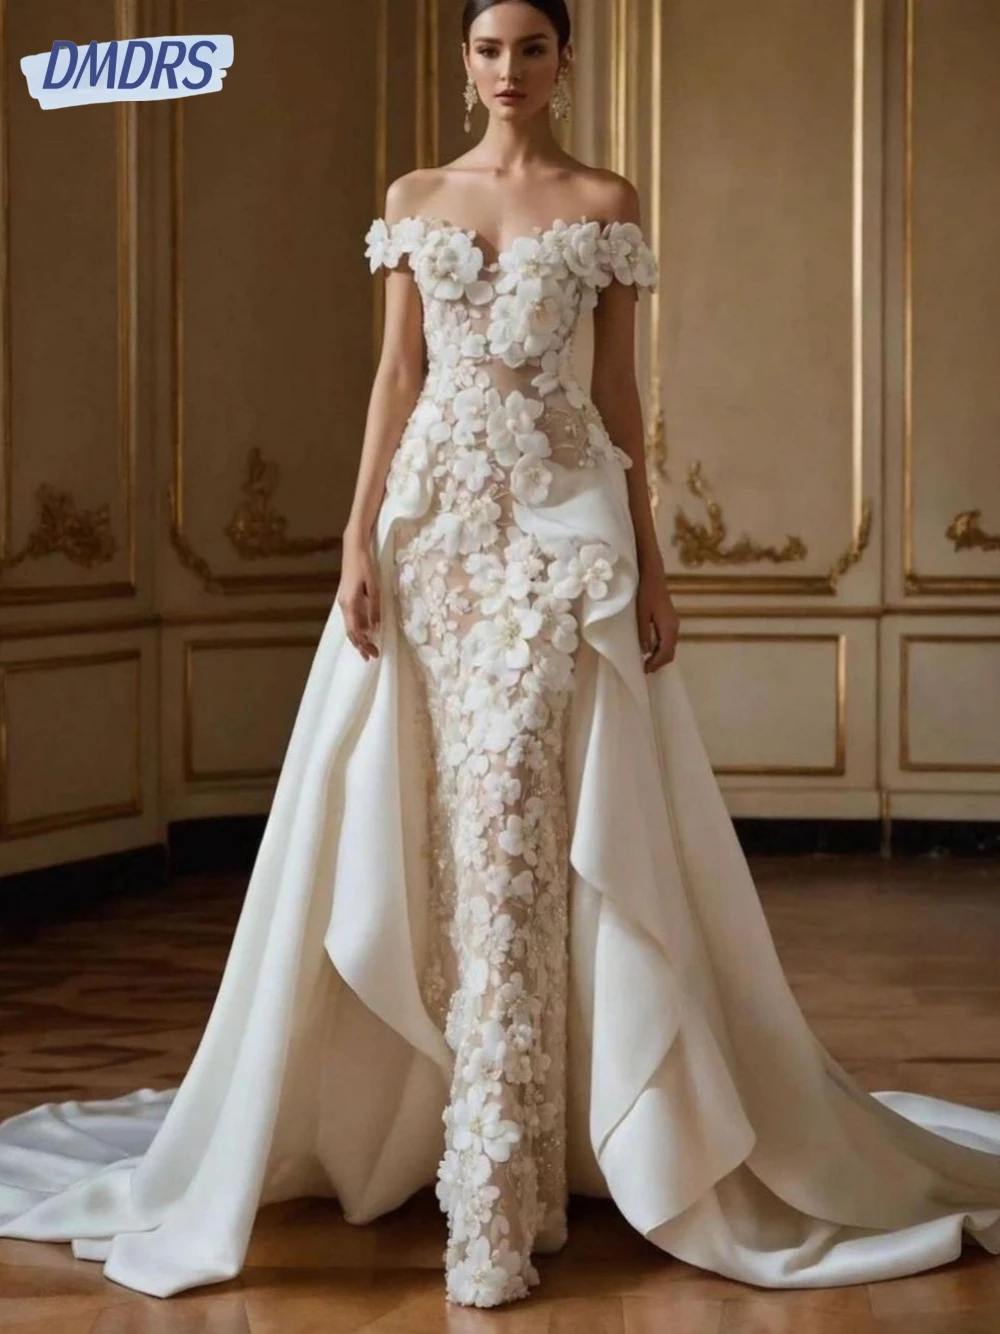 

Romantic Sweetheart Neck Wedding Dresses 3D Flowers Pearls Dress For Bride Luxury A-line Bridal Gown Vestido De Novia